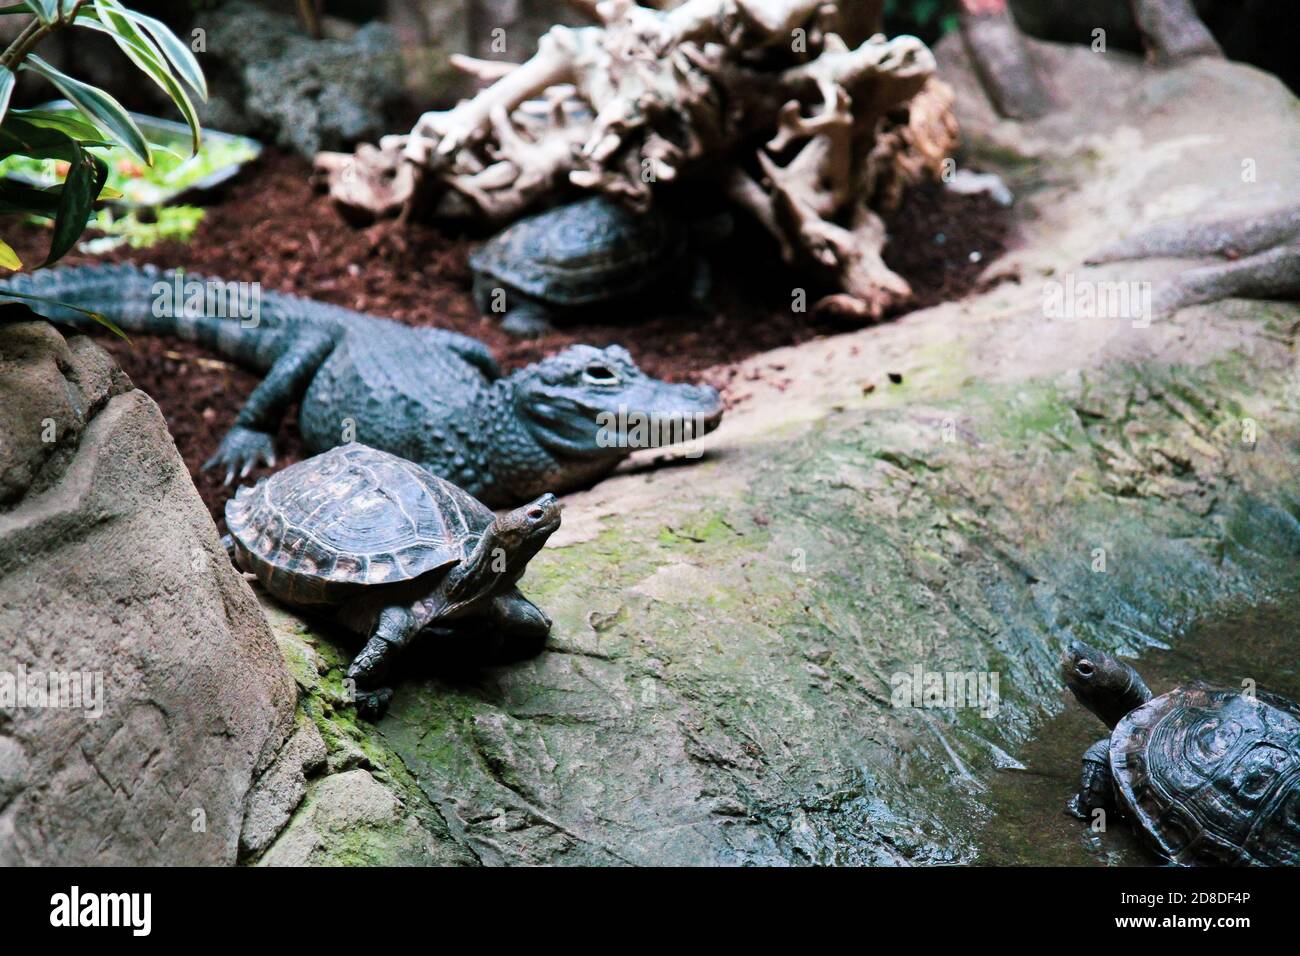 Crocodile and turtle in the zoo Stock Photo